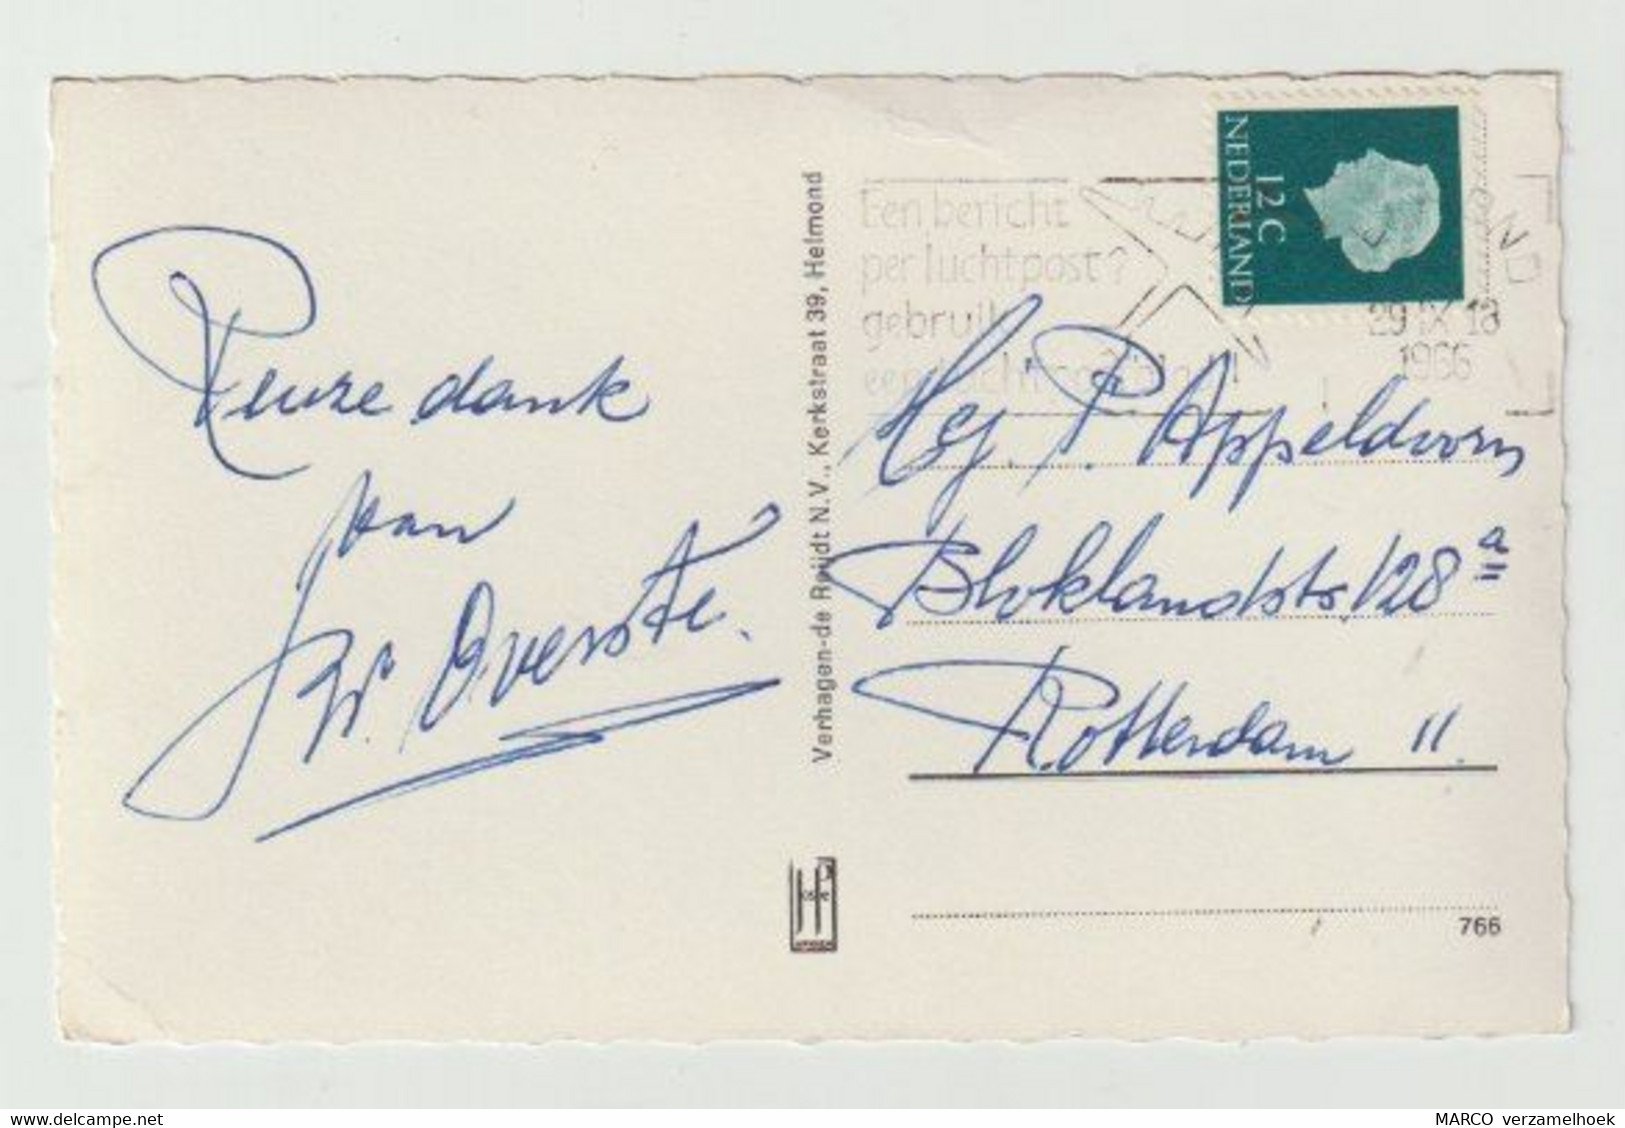 Postcard-ansichtkaart: Kasteel Raadhuis Stadhuis Helmond (NL) 1966 - Helmond